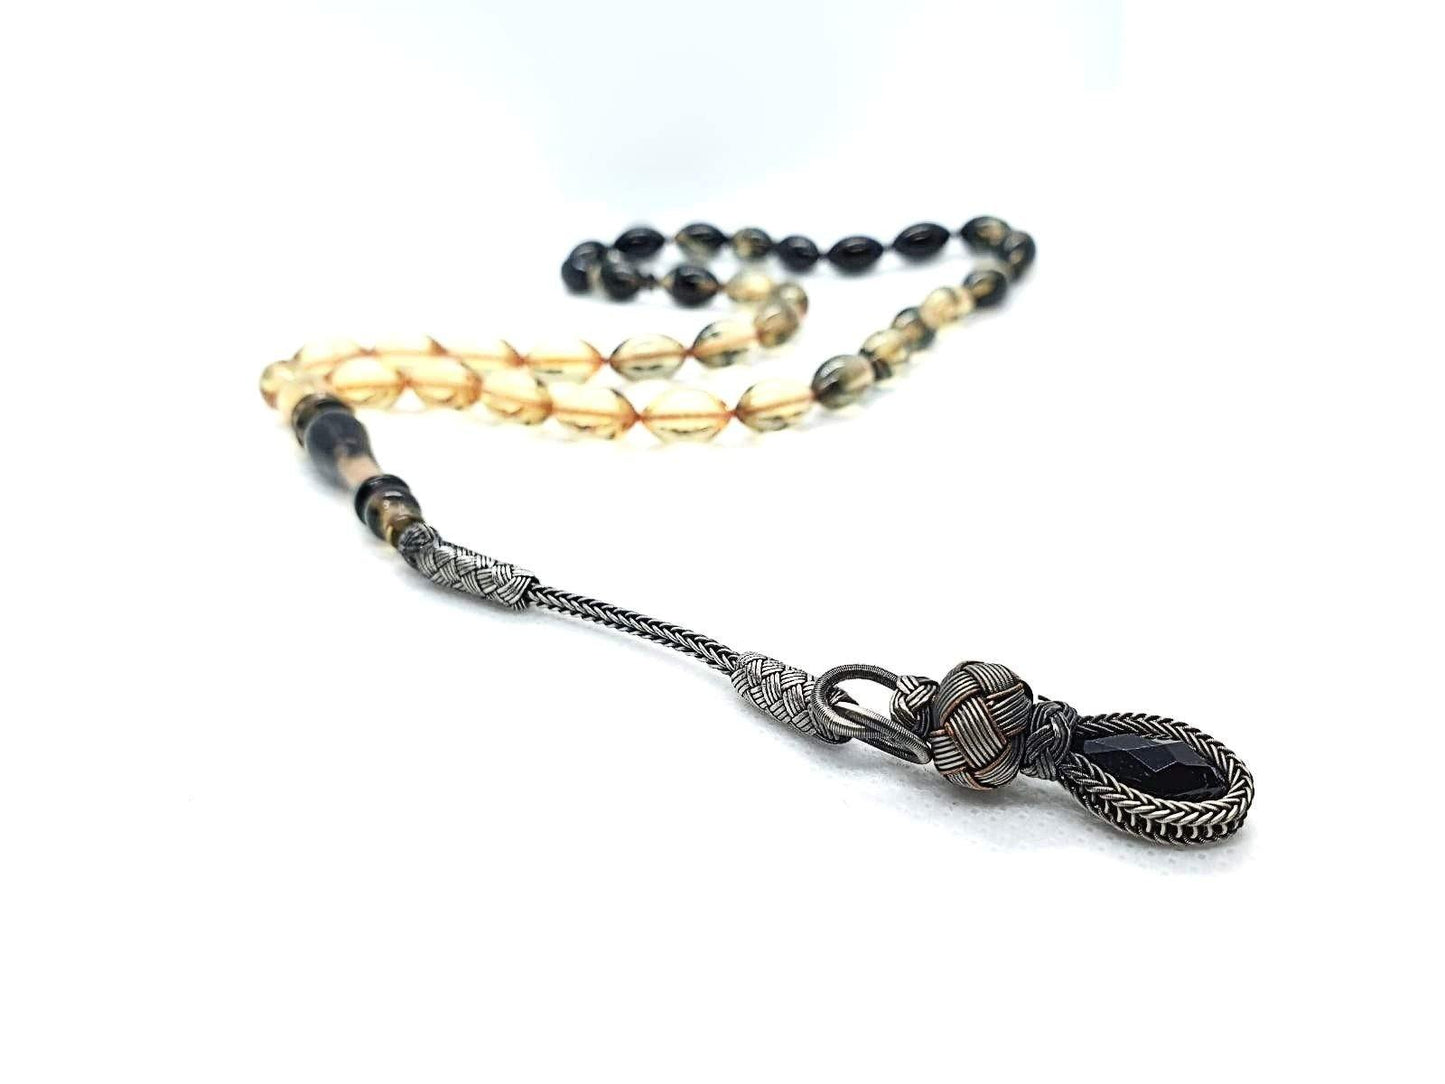  tasbih-tesbih-lrv-gemstone-prayer-meditation-beads-bespoke-custom-made-masters-yoga-spiritual-handmade